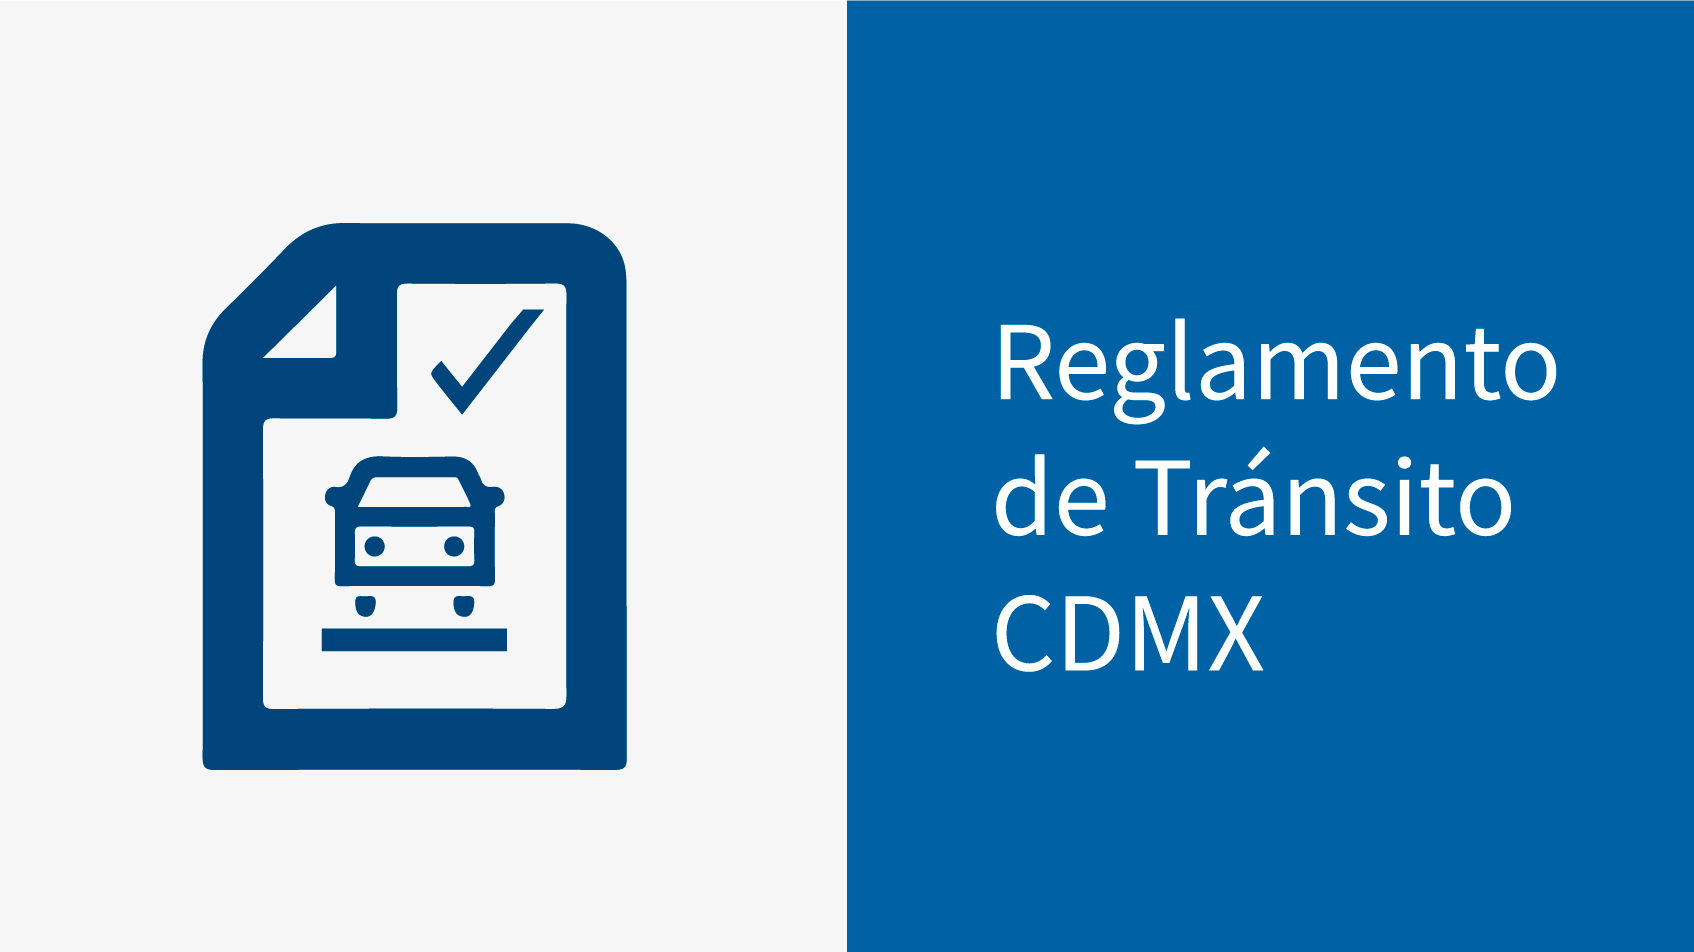 Reglamento de Tránsito CDMX